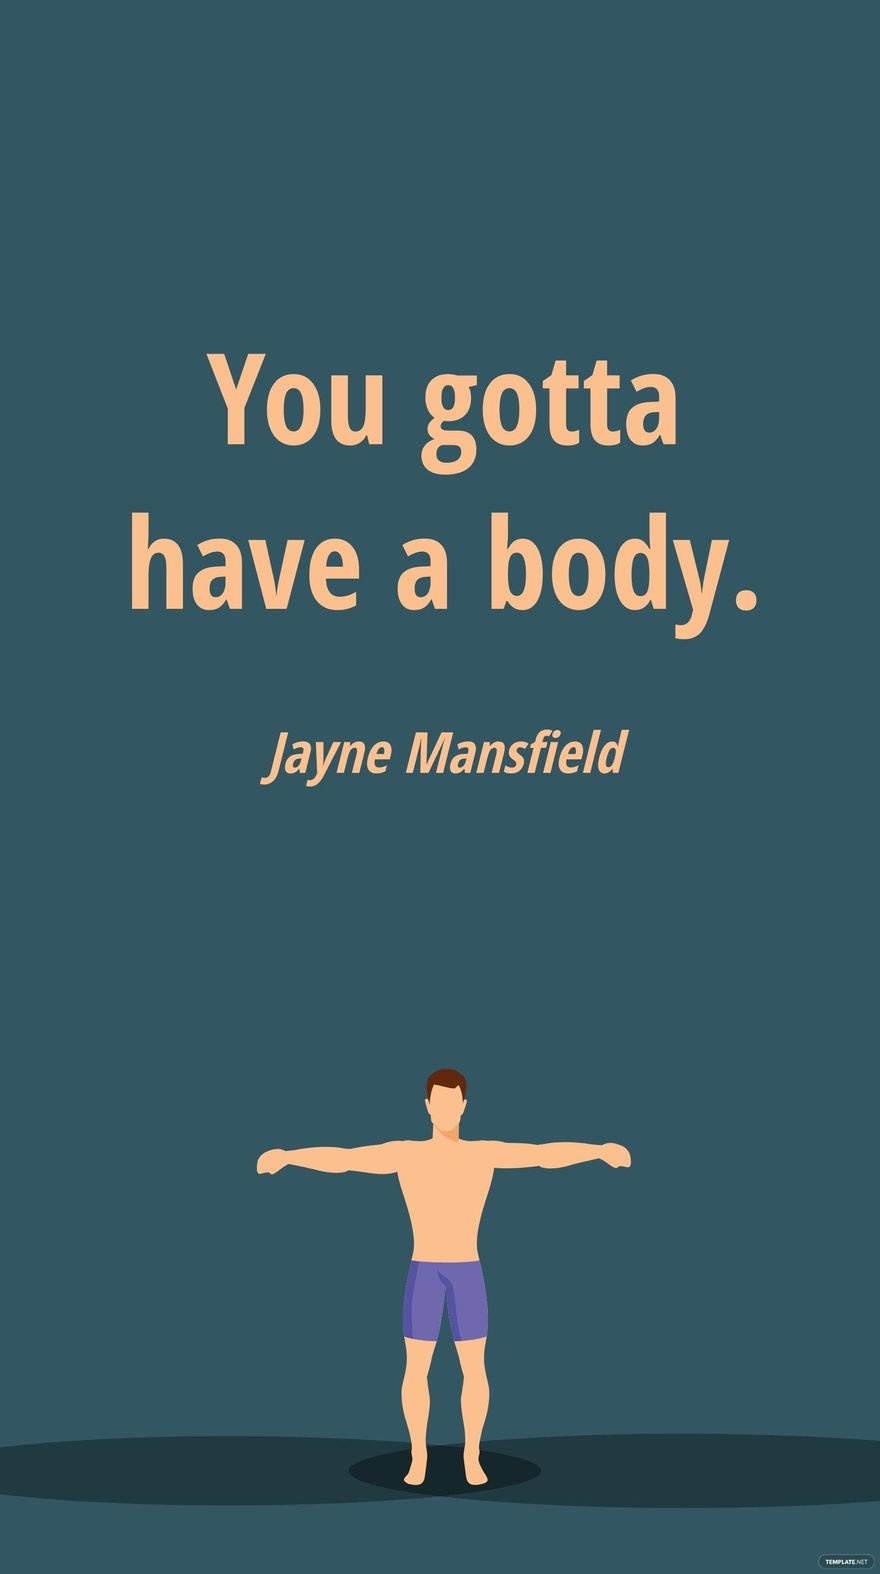 Free Jayne Mansfield - You gotta have a body. in JPG